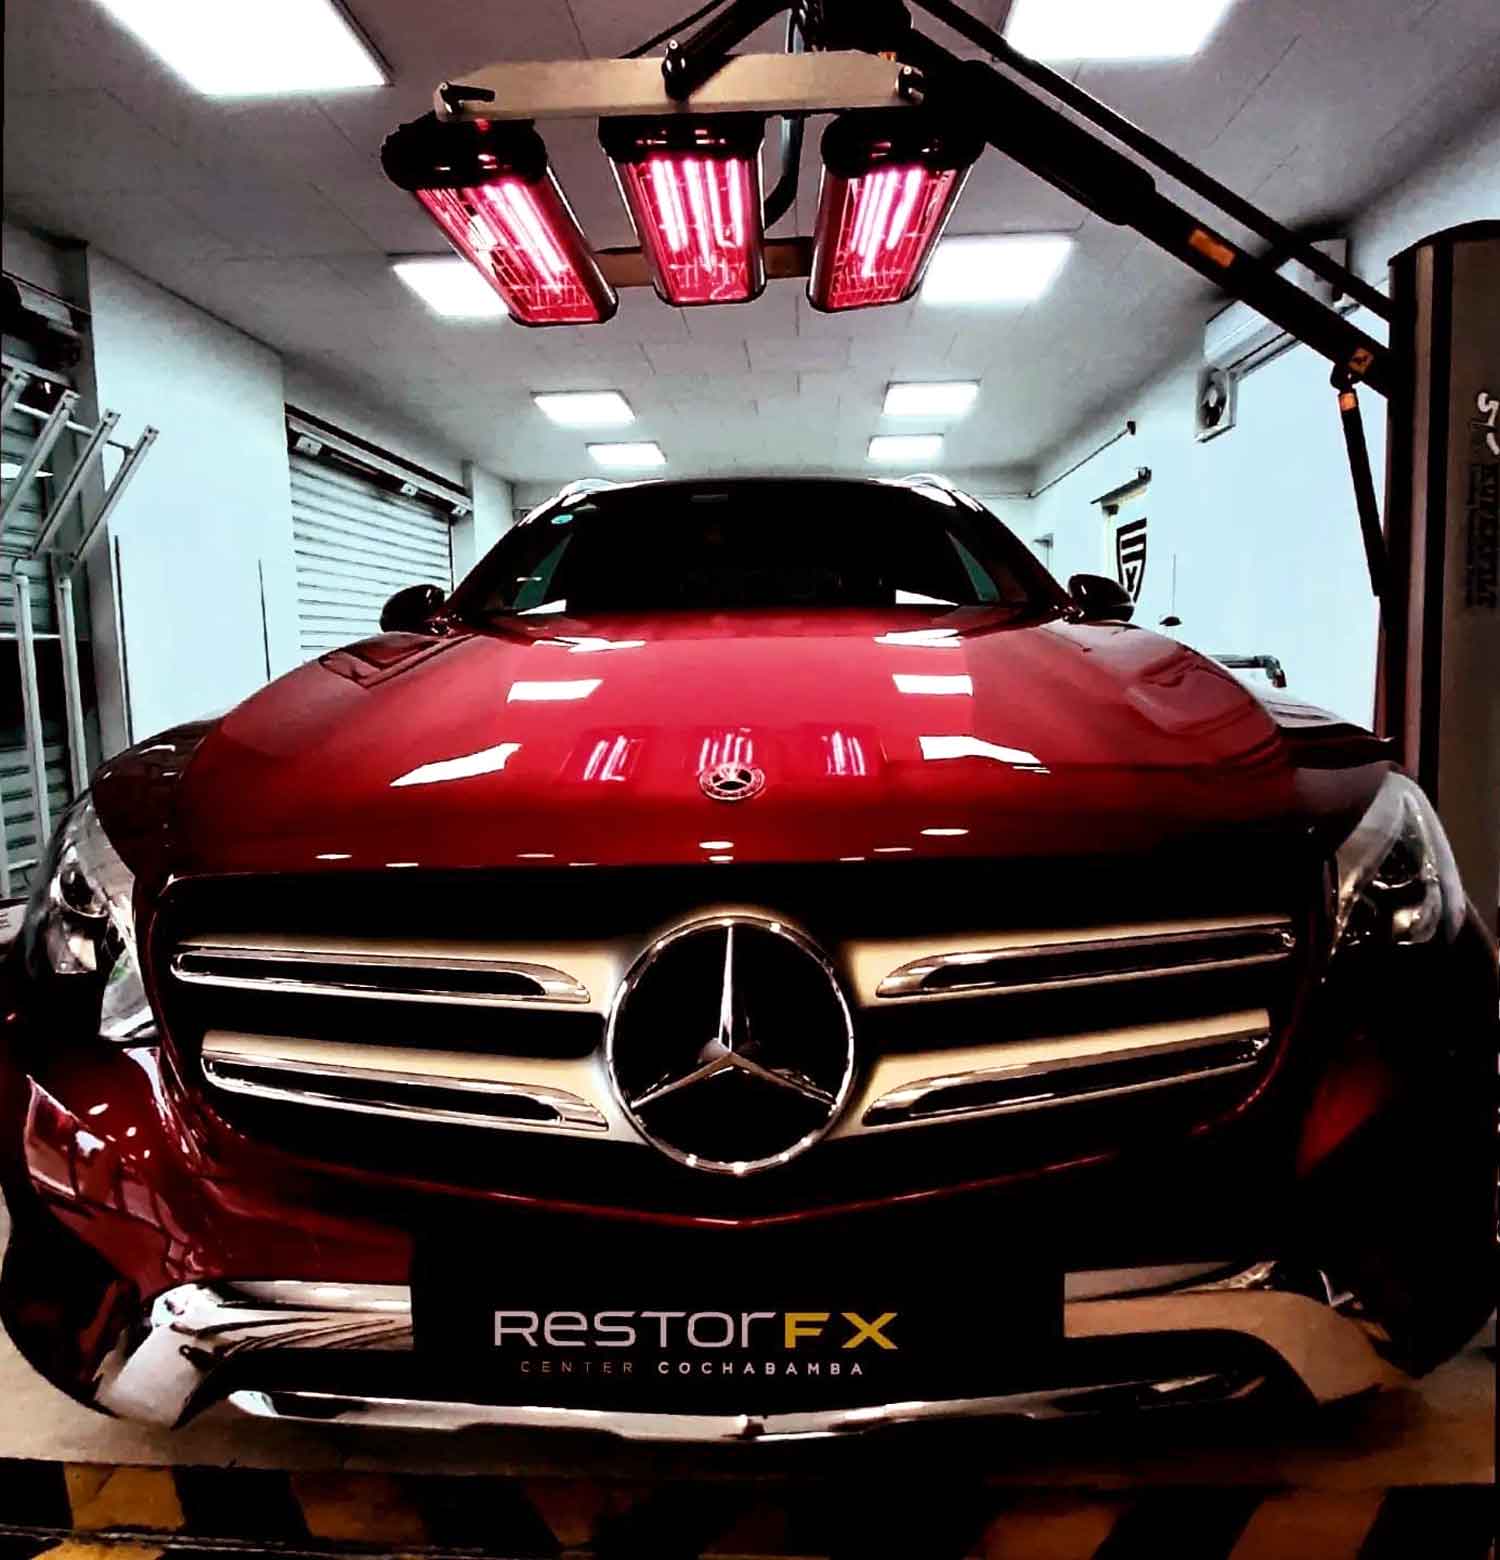 Bright red Mercedes SUV parked under infrared lamps inside RestorFX Cochabamba center